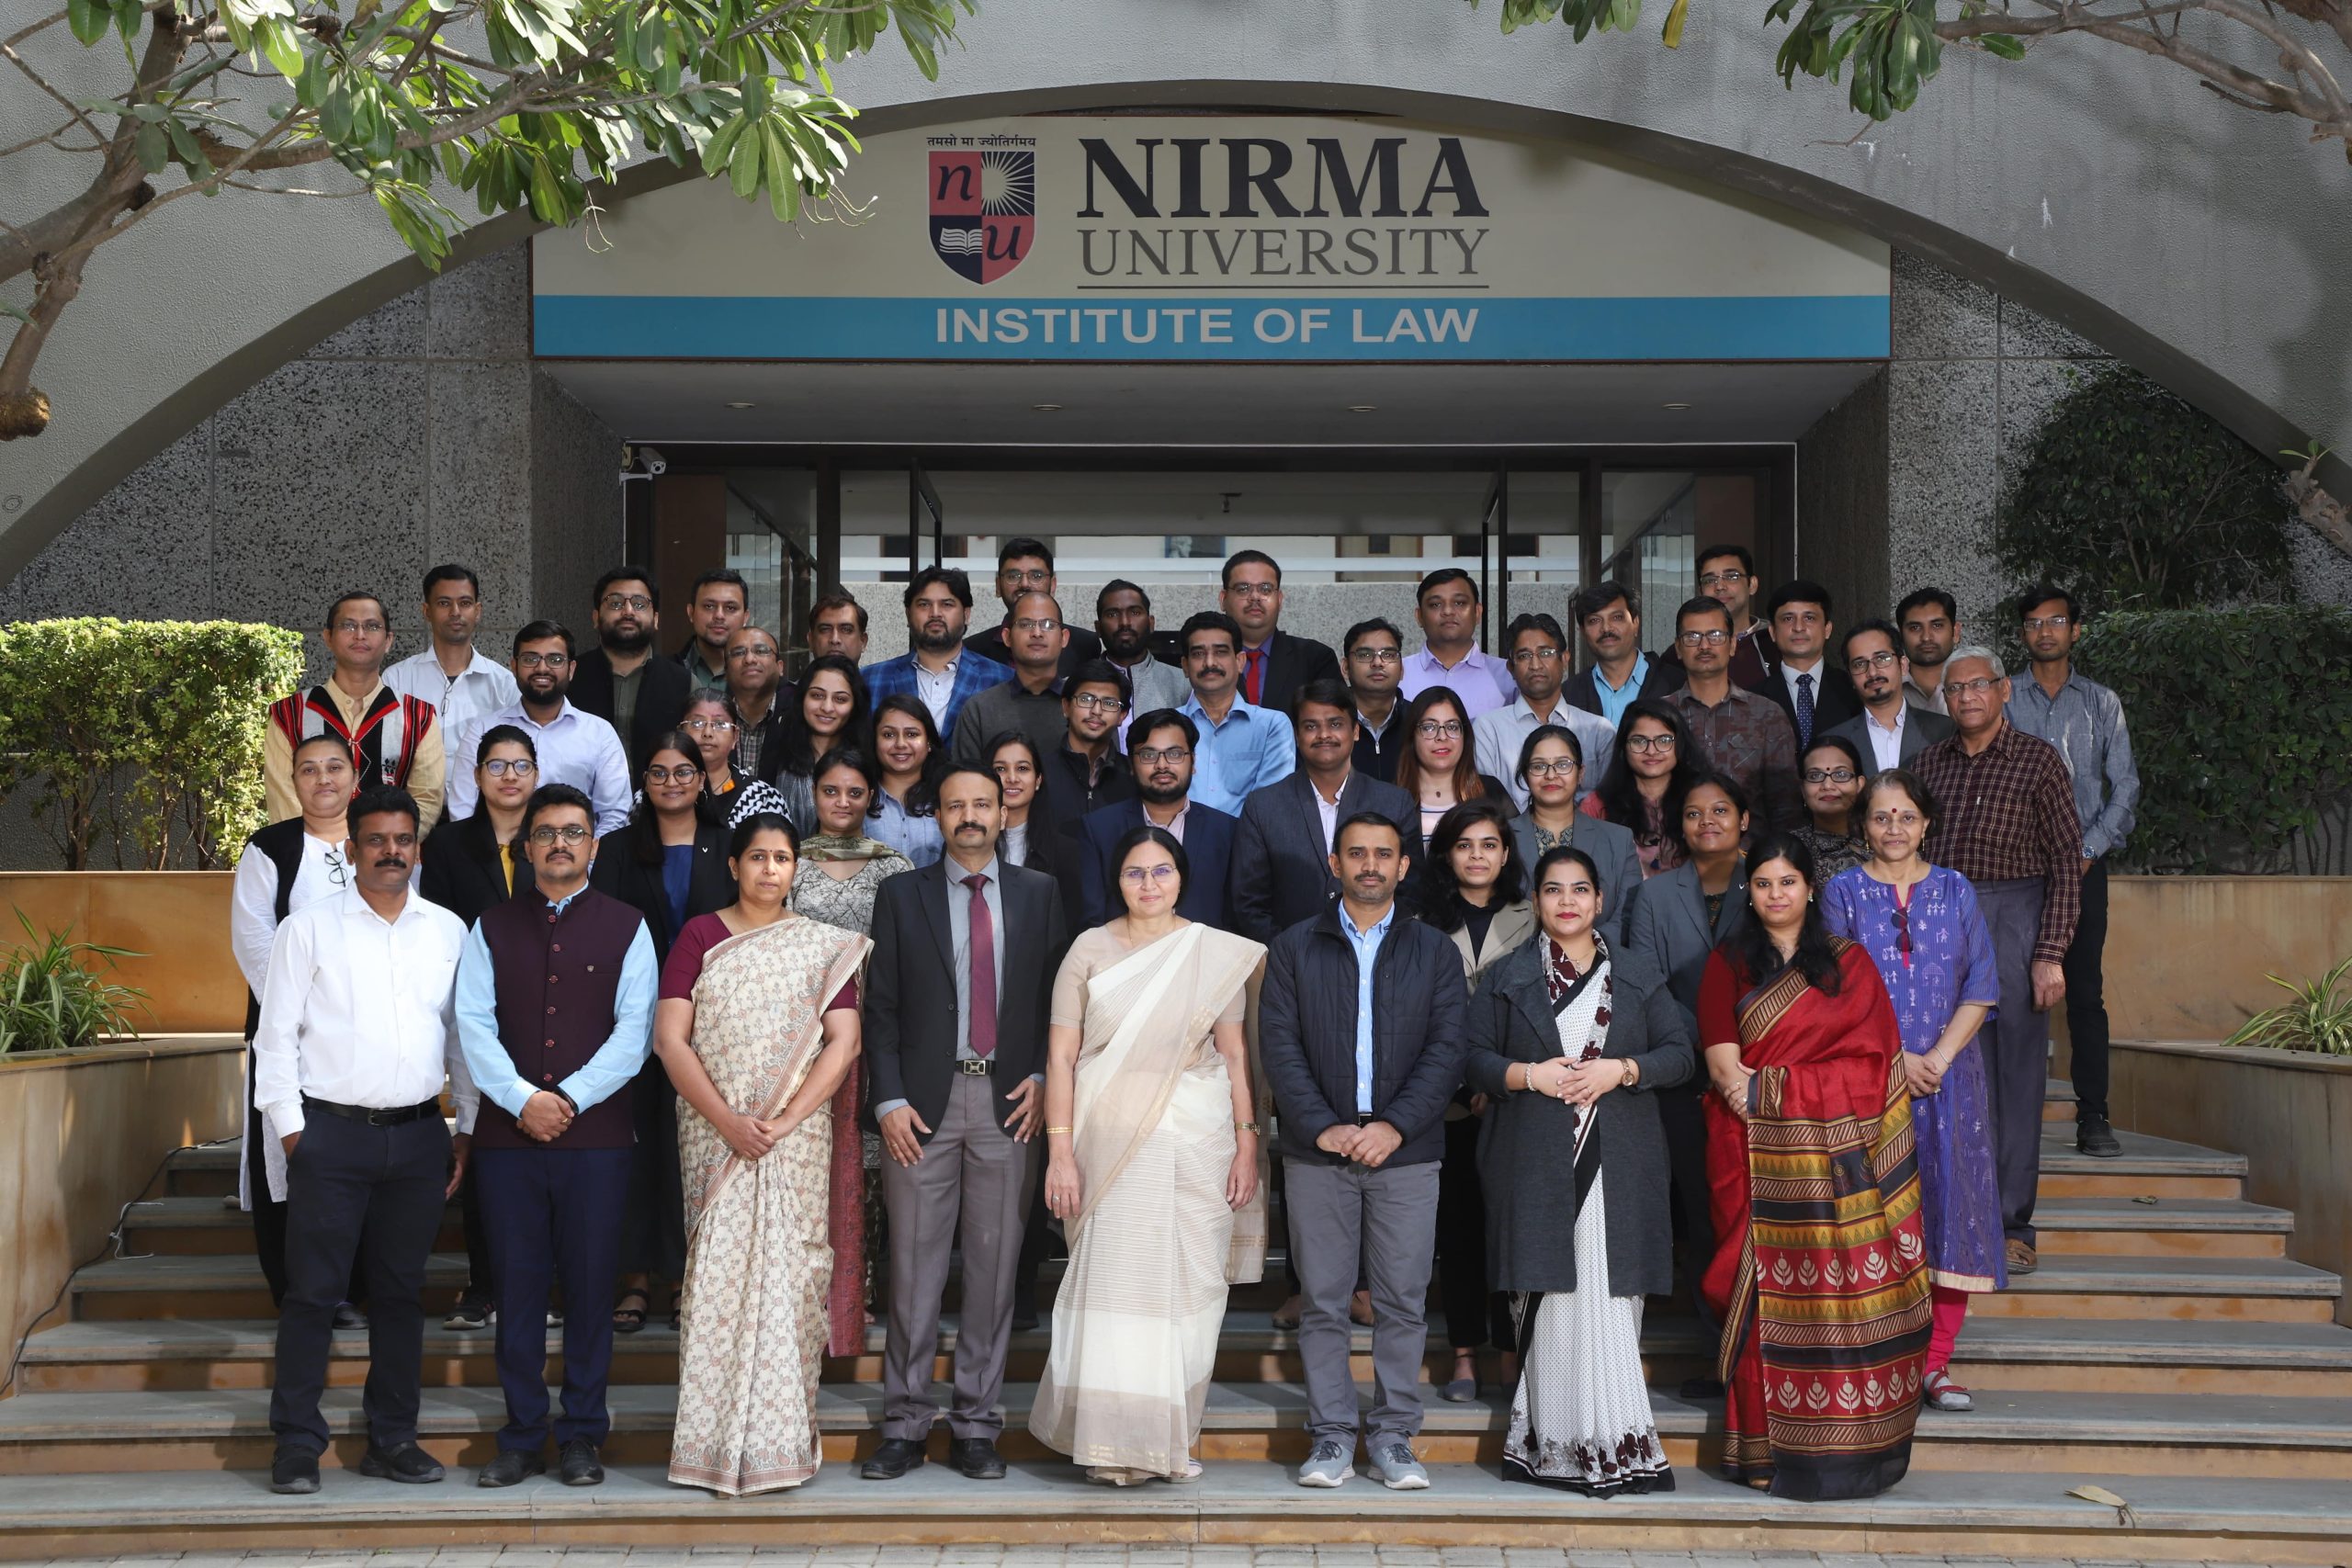 Nirma University - Institute of Law